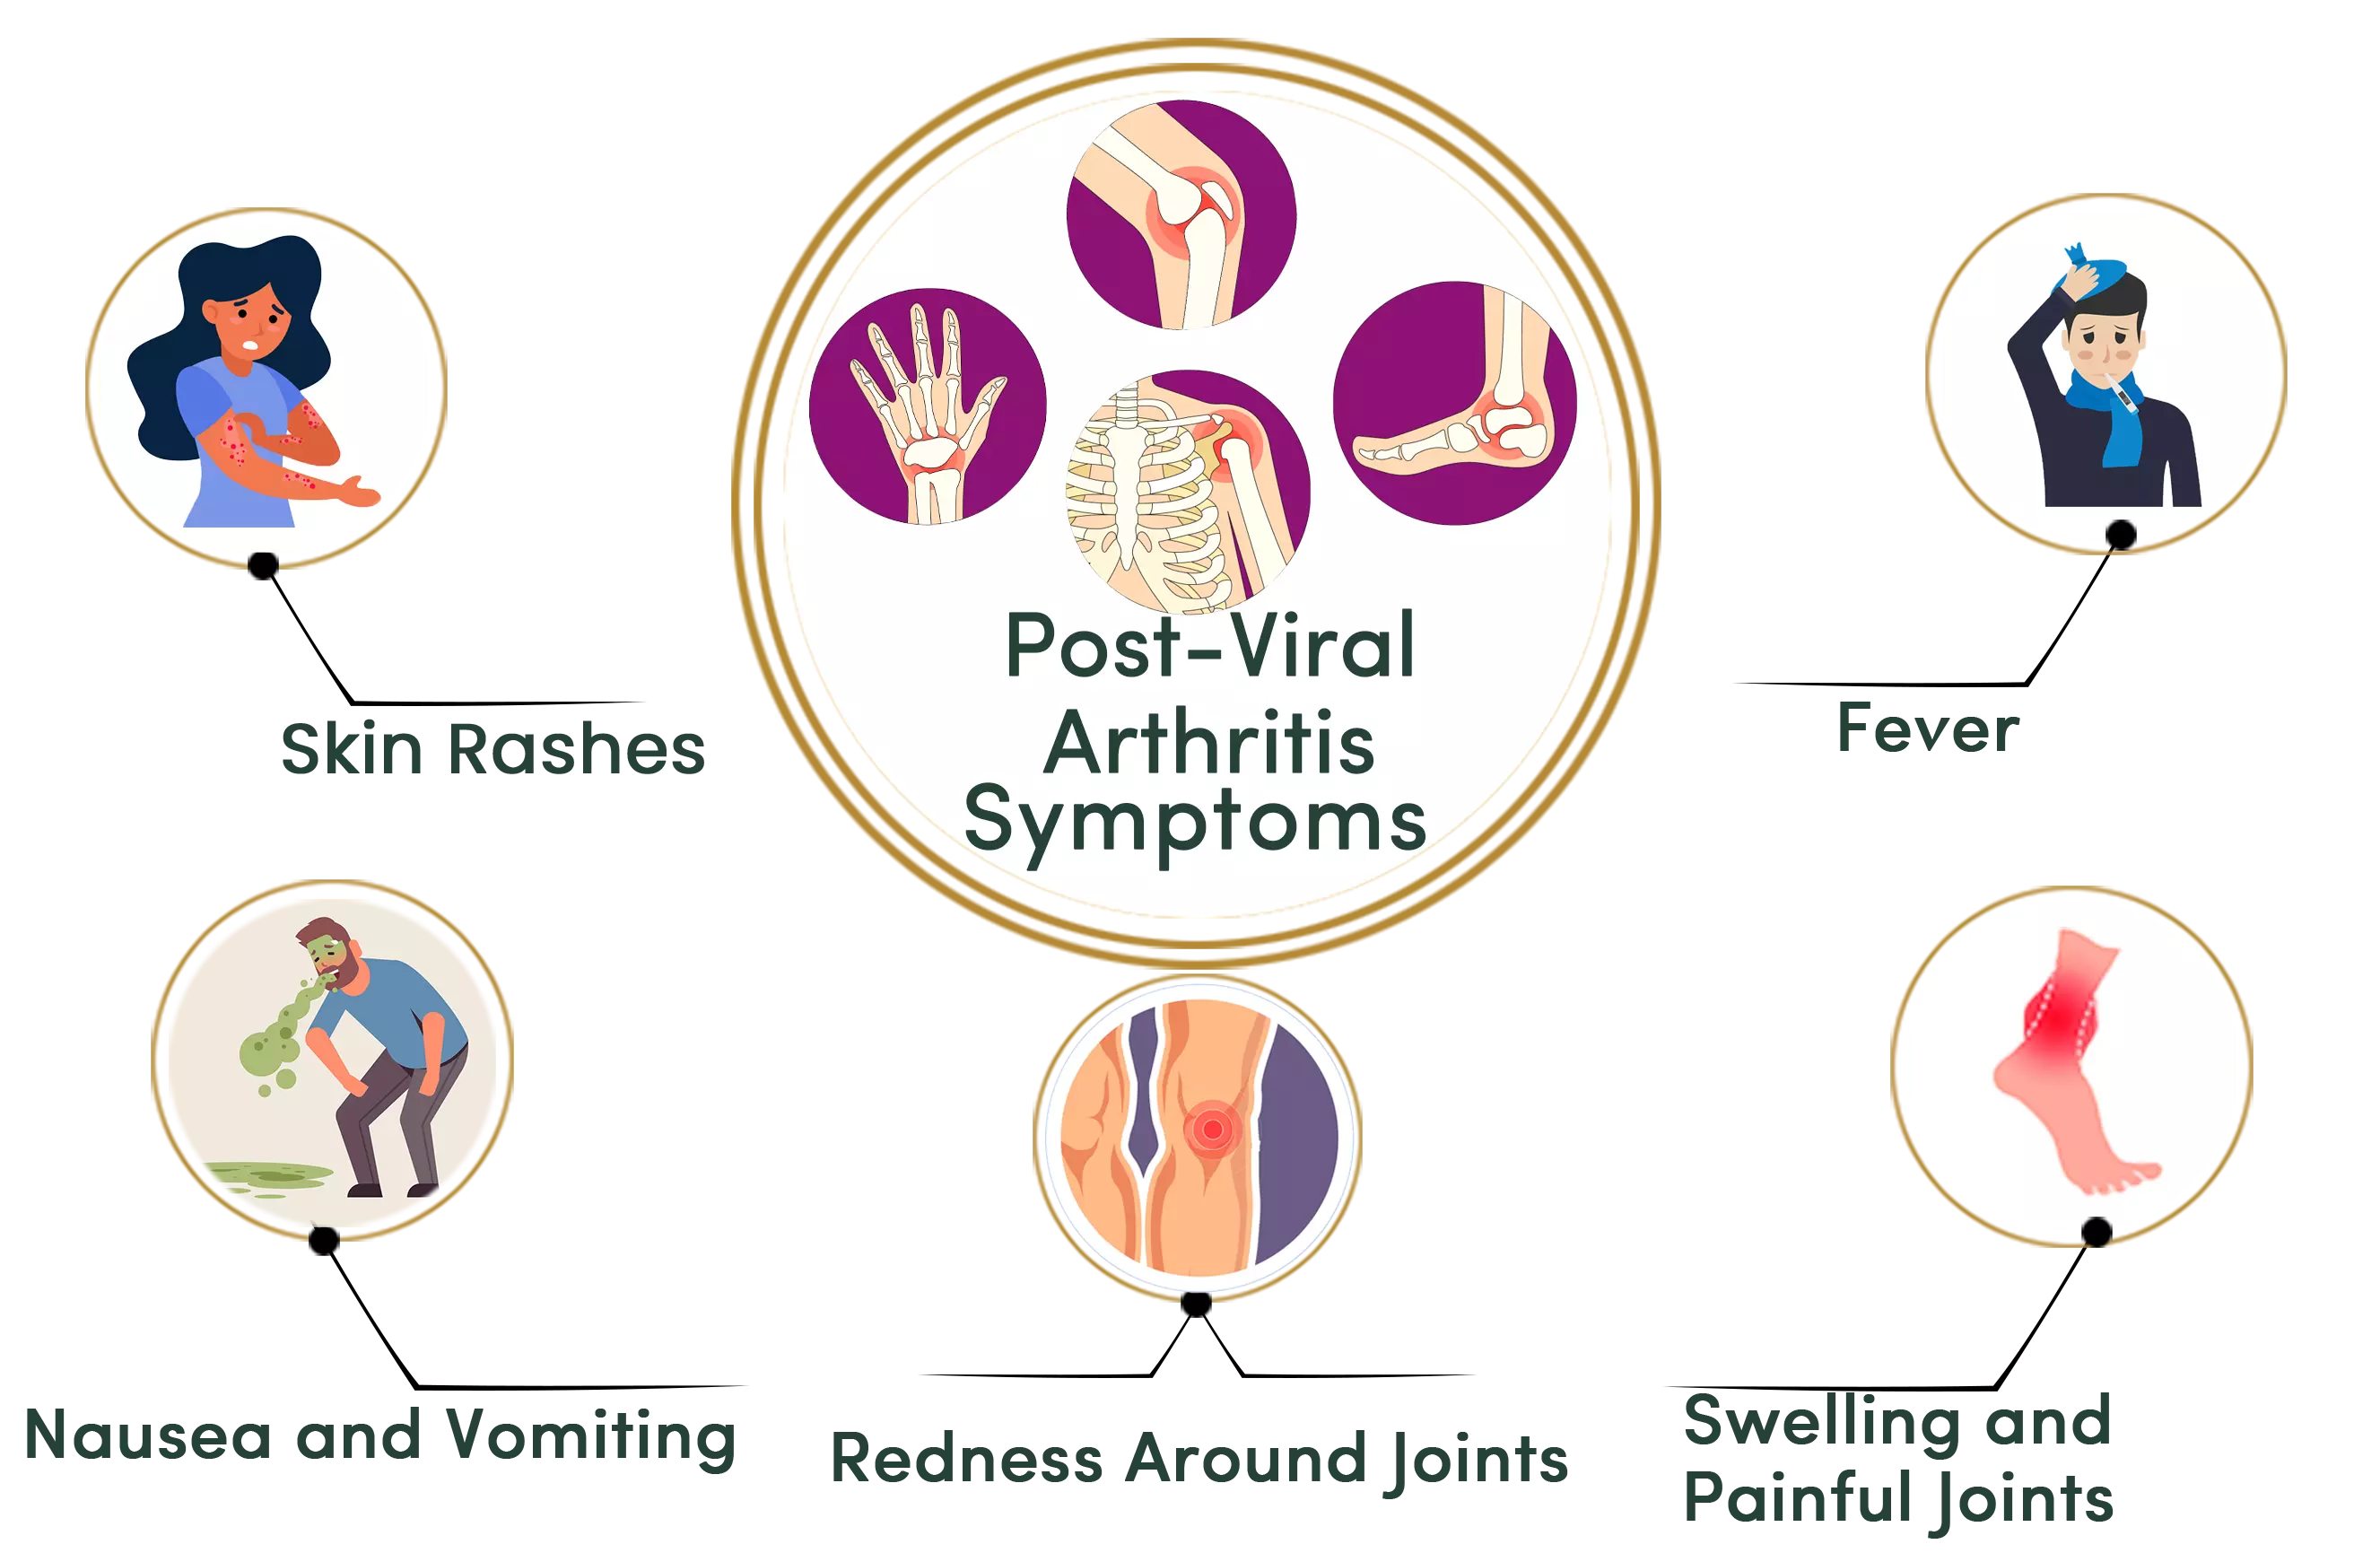 Post-Viral Arthritis symptoms